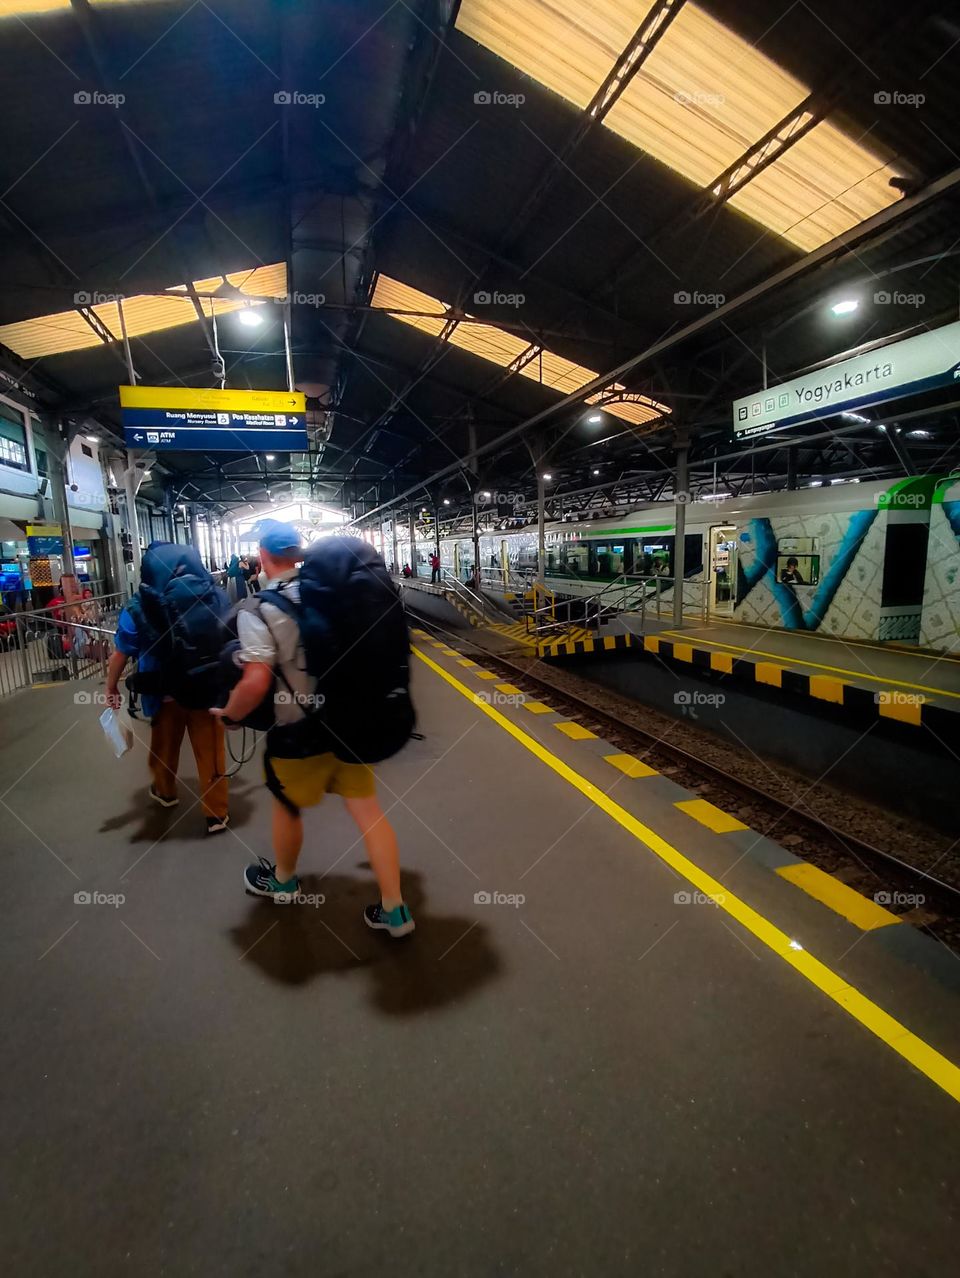 Tugu Station at Yogyakarta, Indonesia.